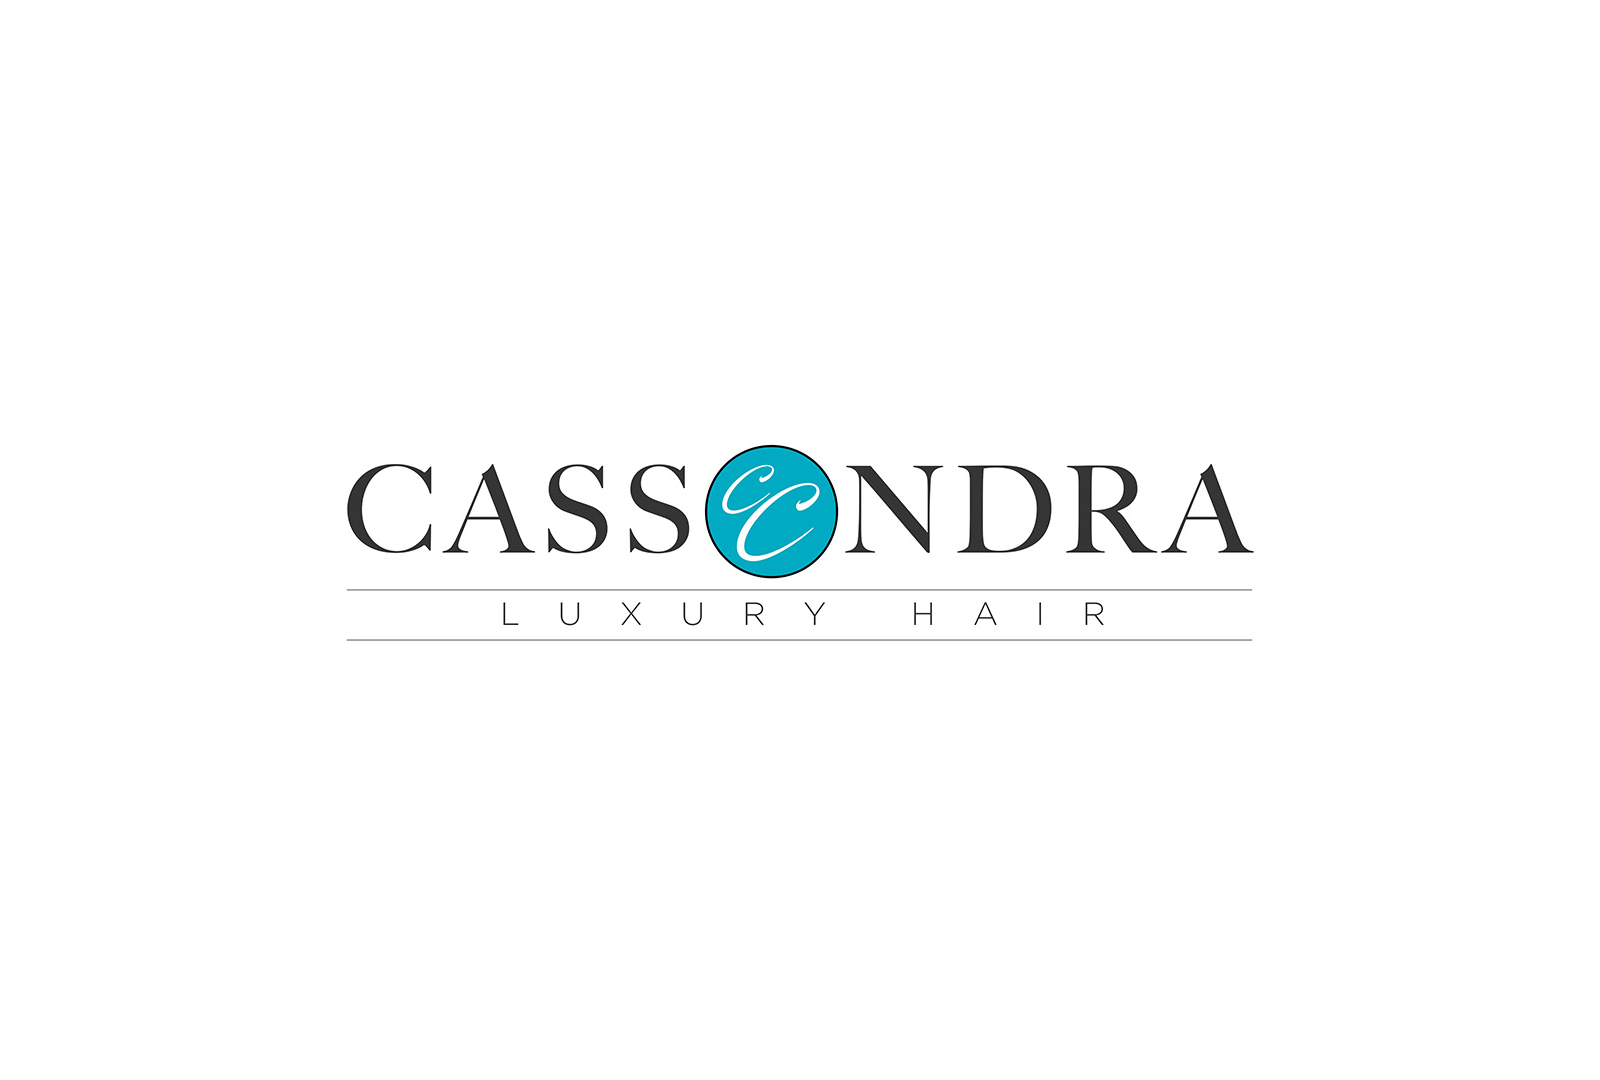 Logo Design & Brand Development - Cassondra Luxury Hair - Palm Island Creative